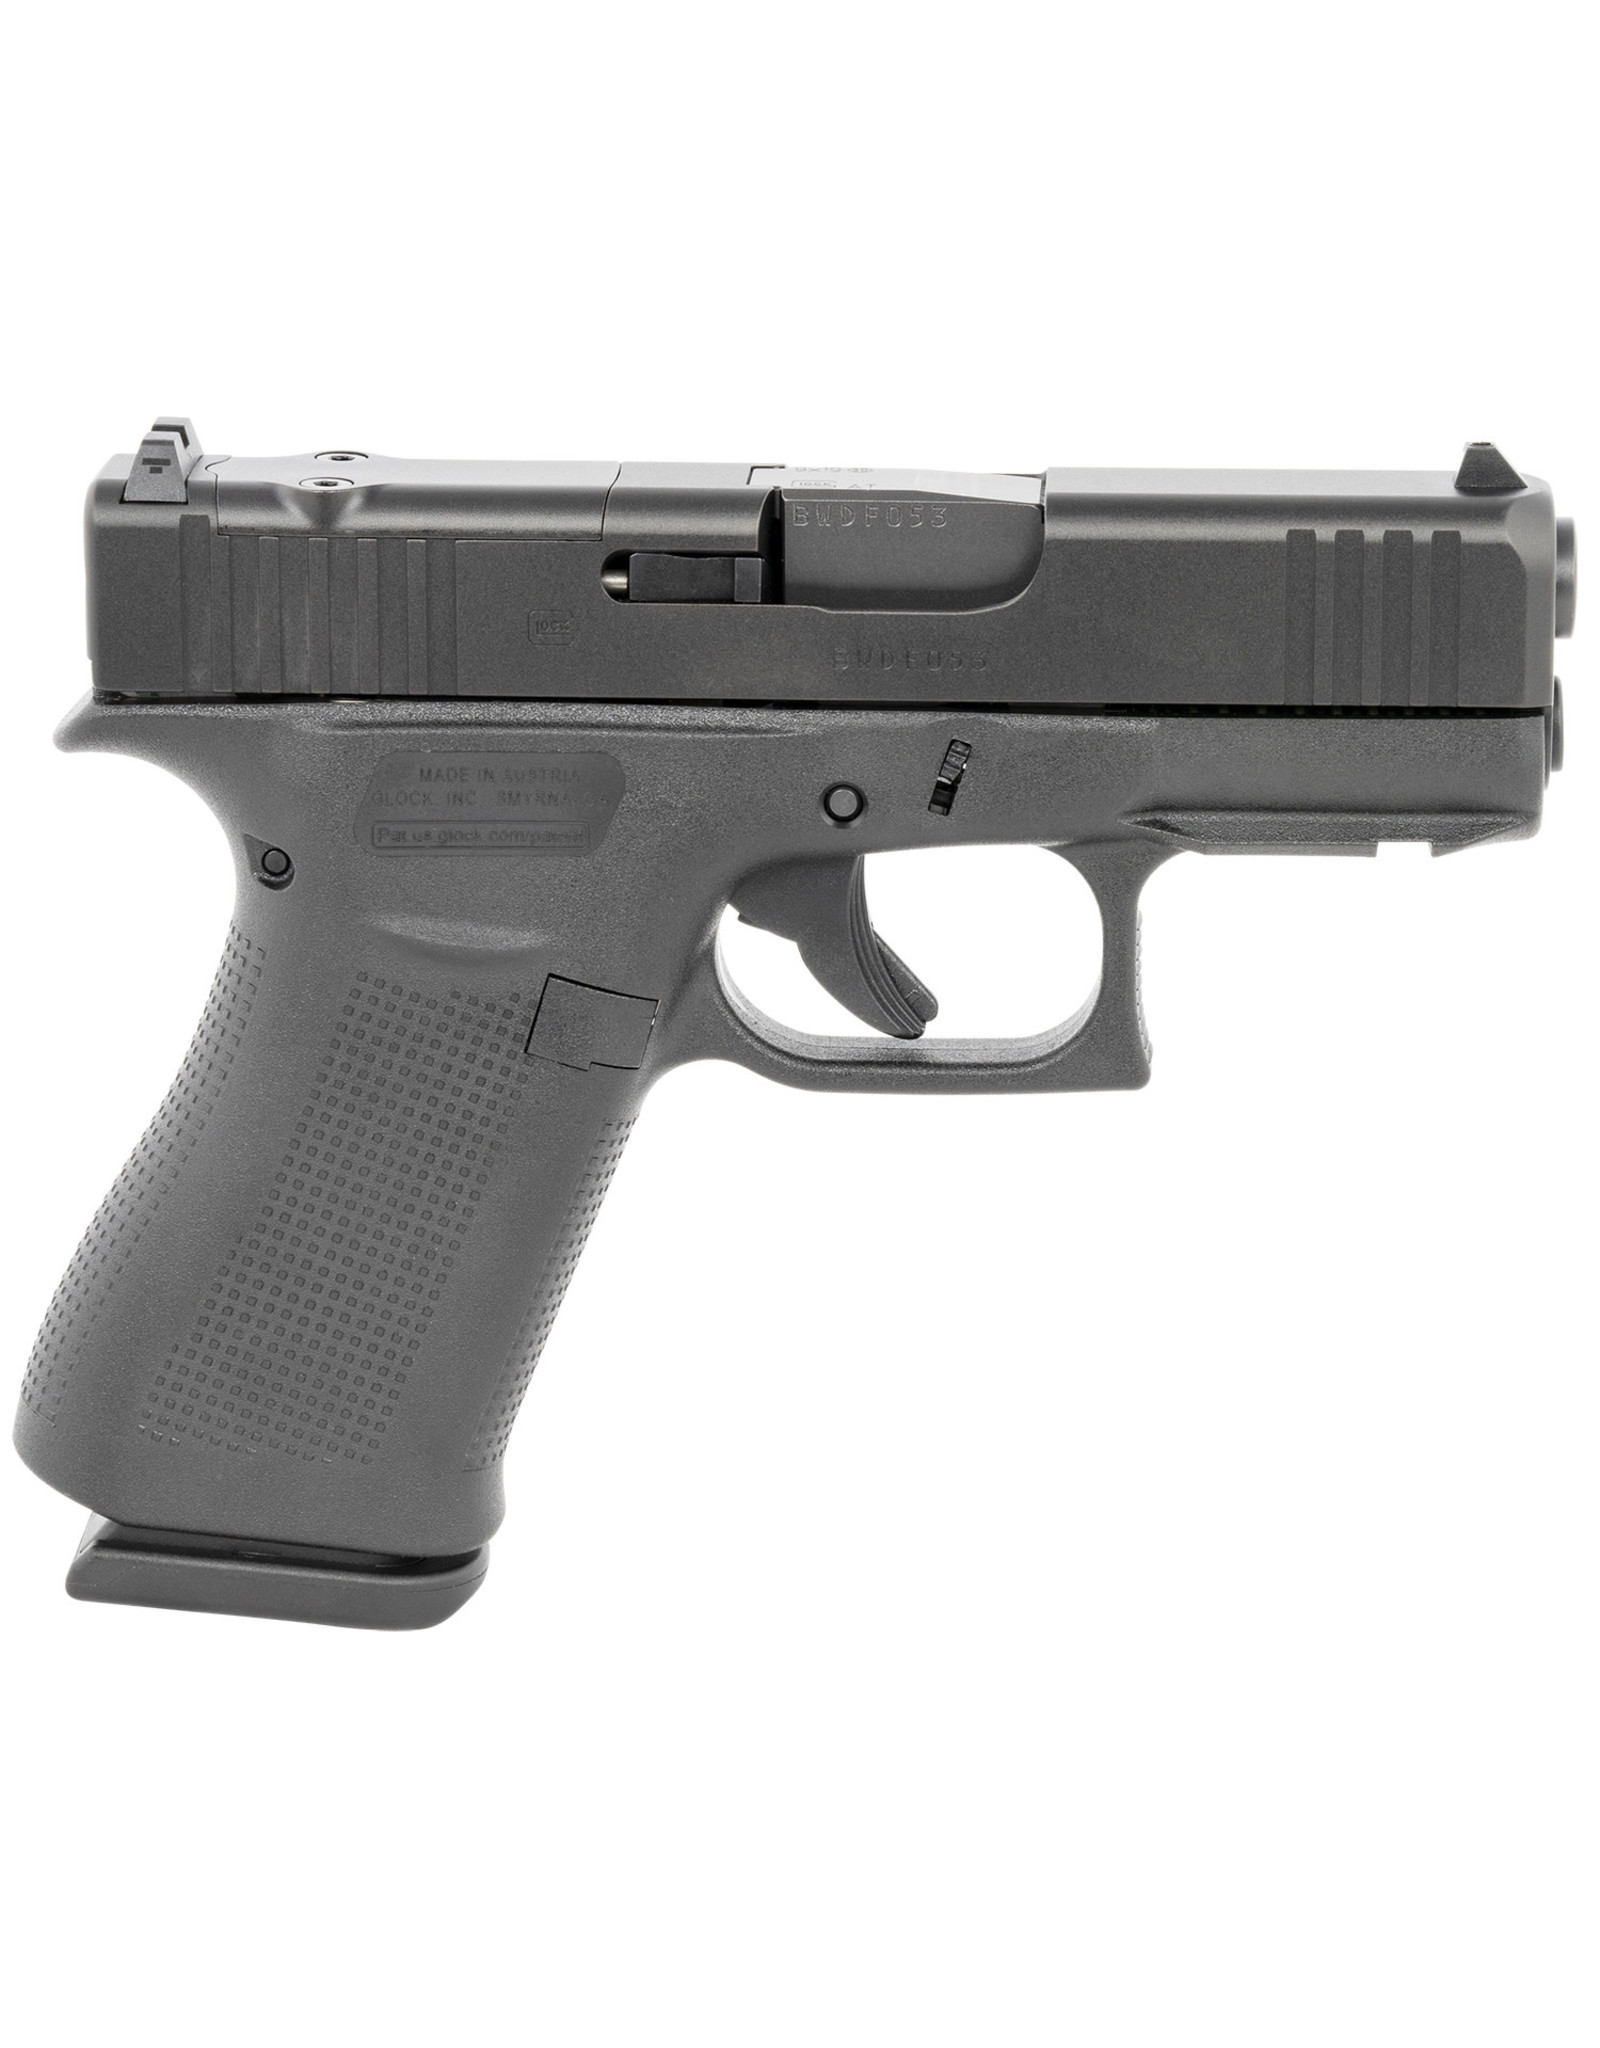 Glock 43X MOS 9mm 10+1 Round 3.41" bbl